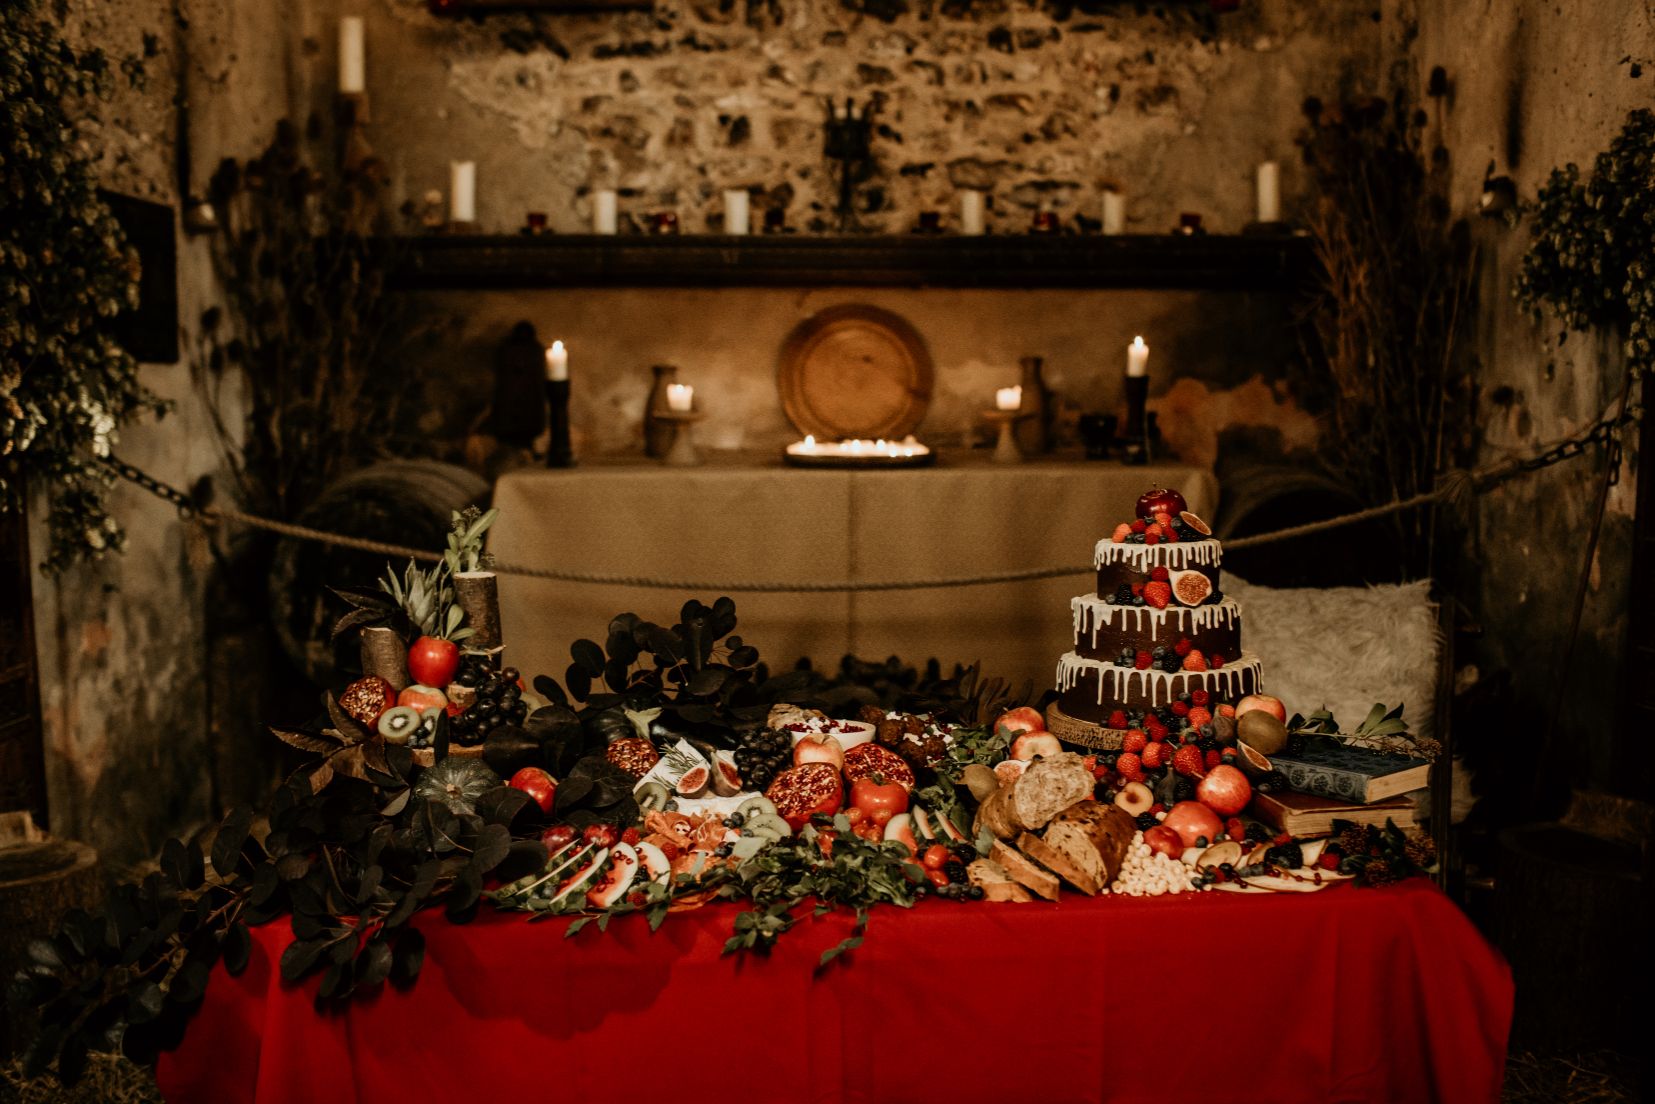 alternative fairytale wedding- snow white wedding- charlotte laurie designs-chloe mary photo- unconventional wedding- alternative wedding inspiration- wedding grazing table